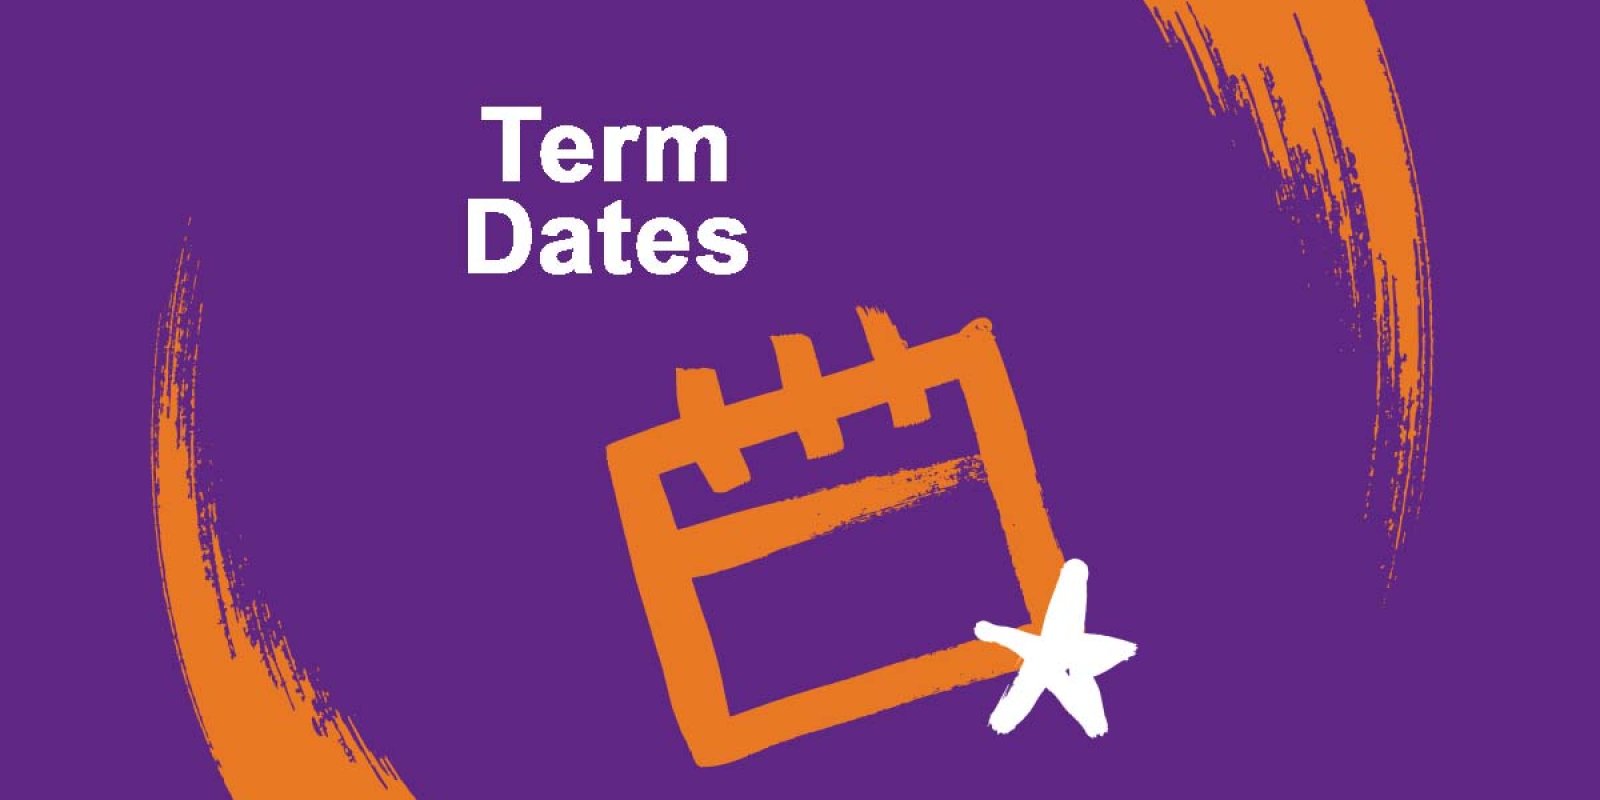 Term Dates